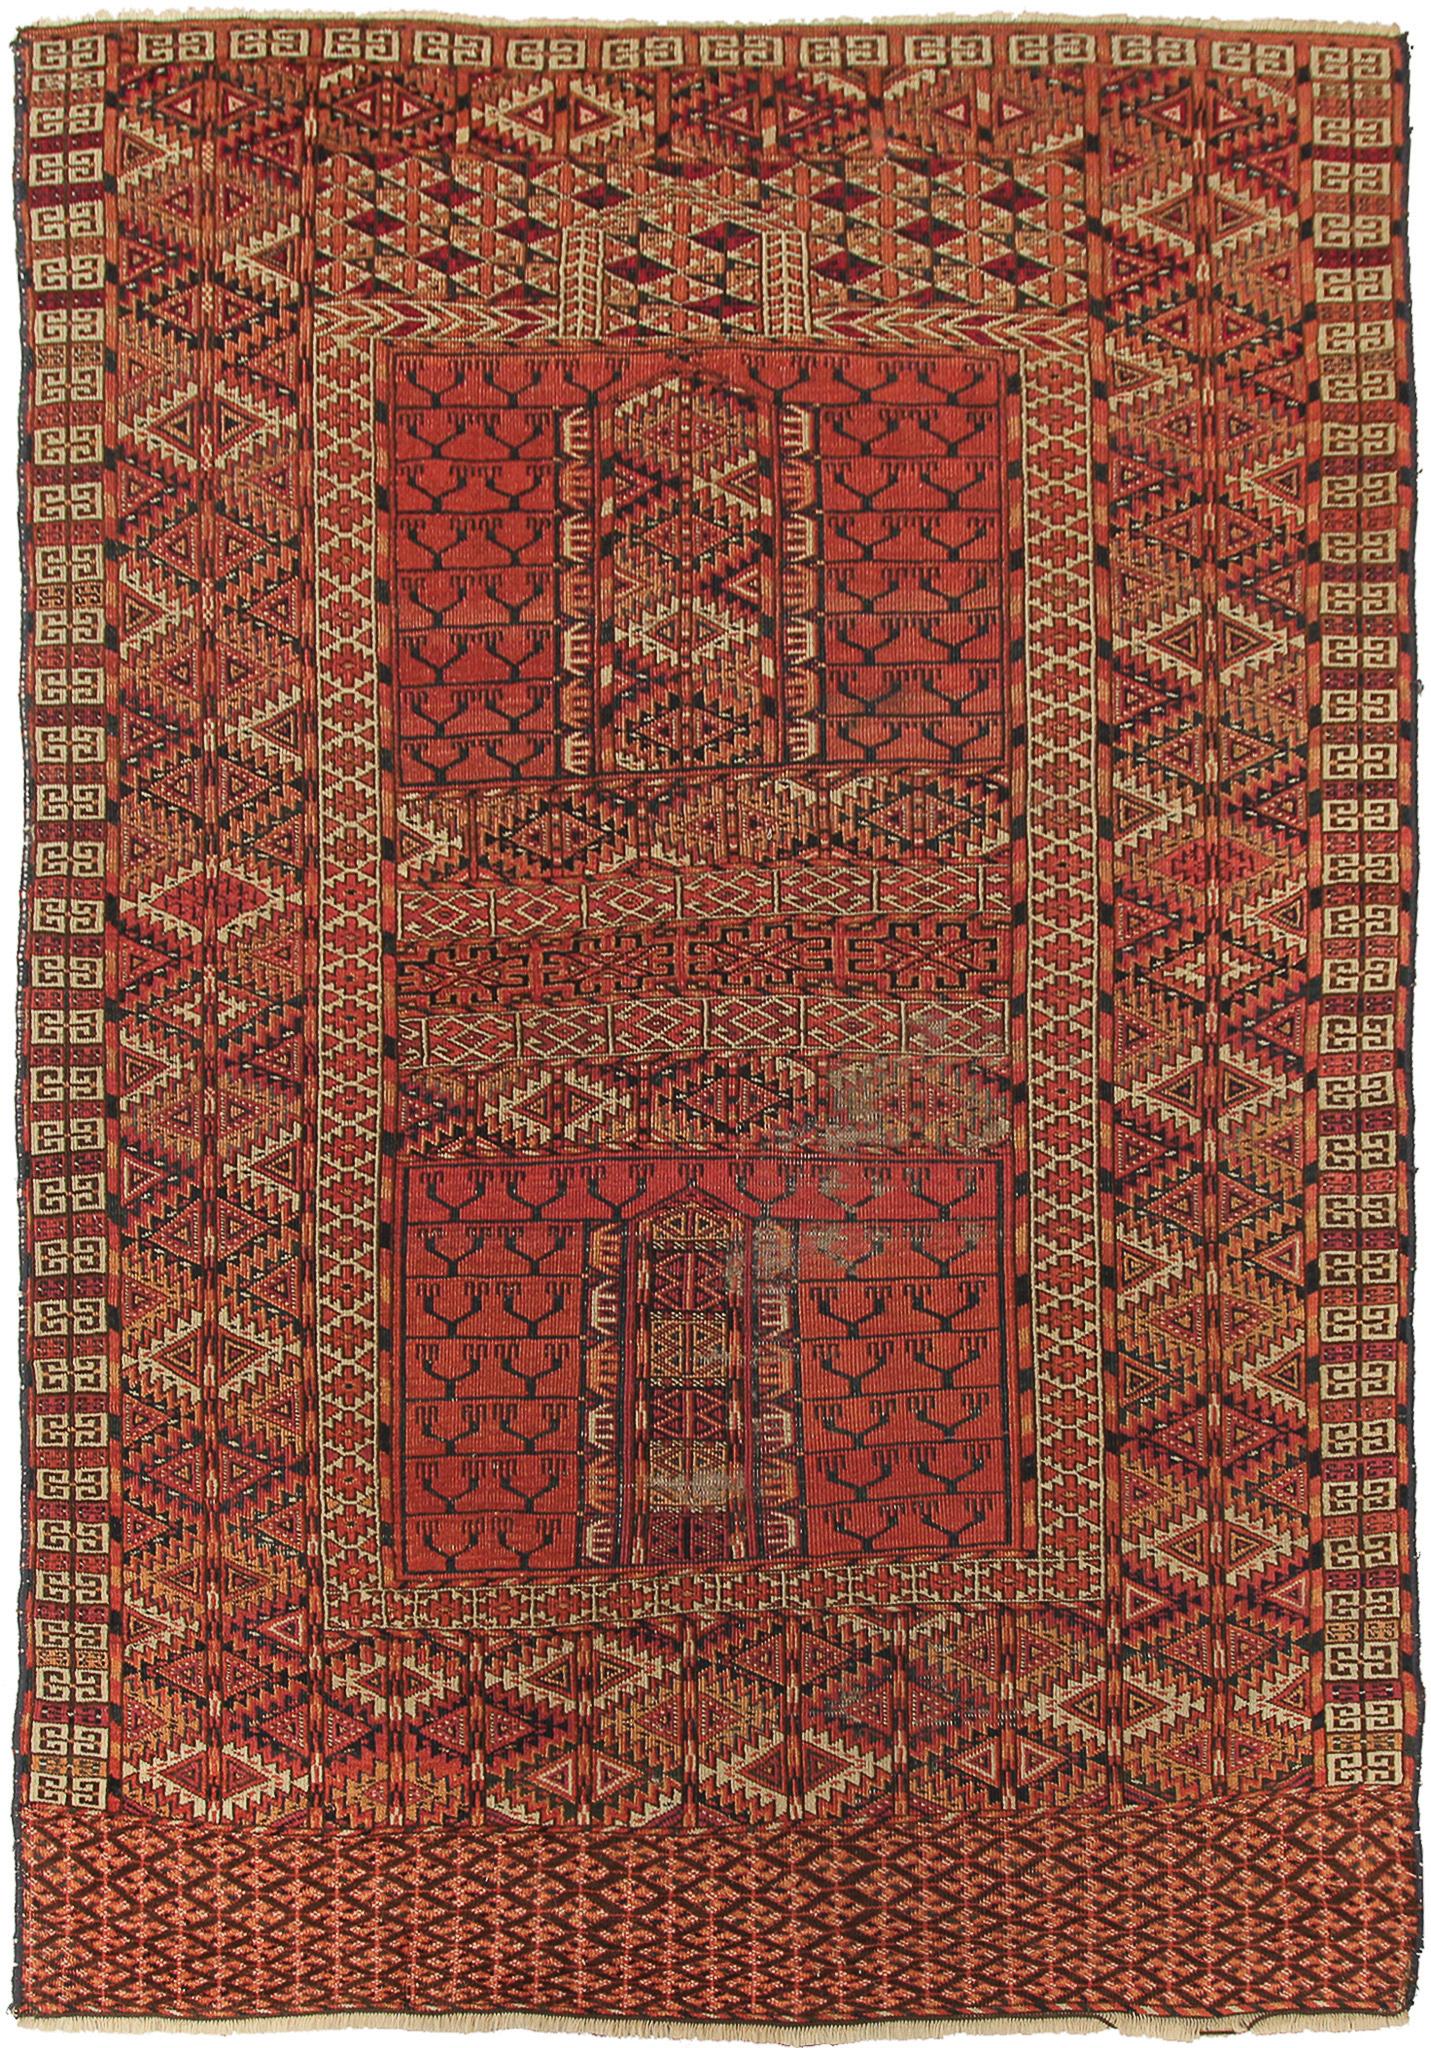 Antique Tekke Turkoman Hatchli Ensi Rug Fine Tribal Rare Rug

4' x 5'

120cm x 158cm 

Circa 1880

